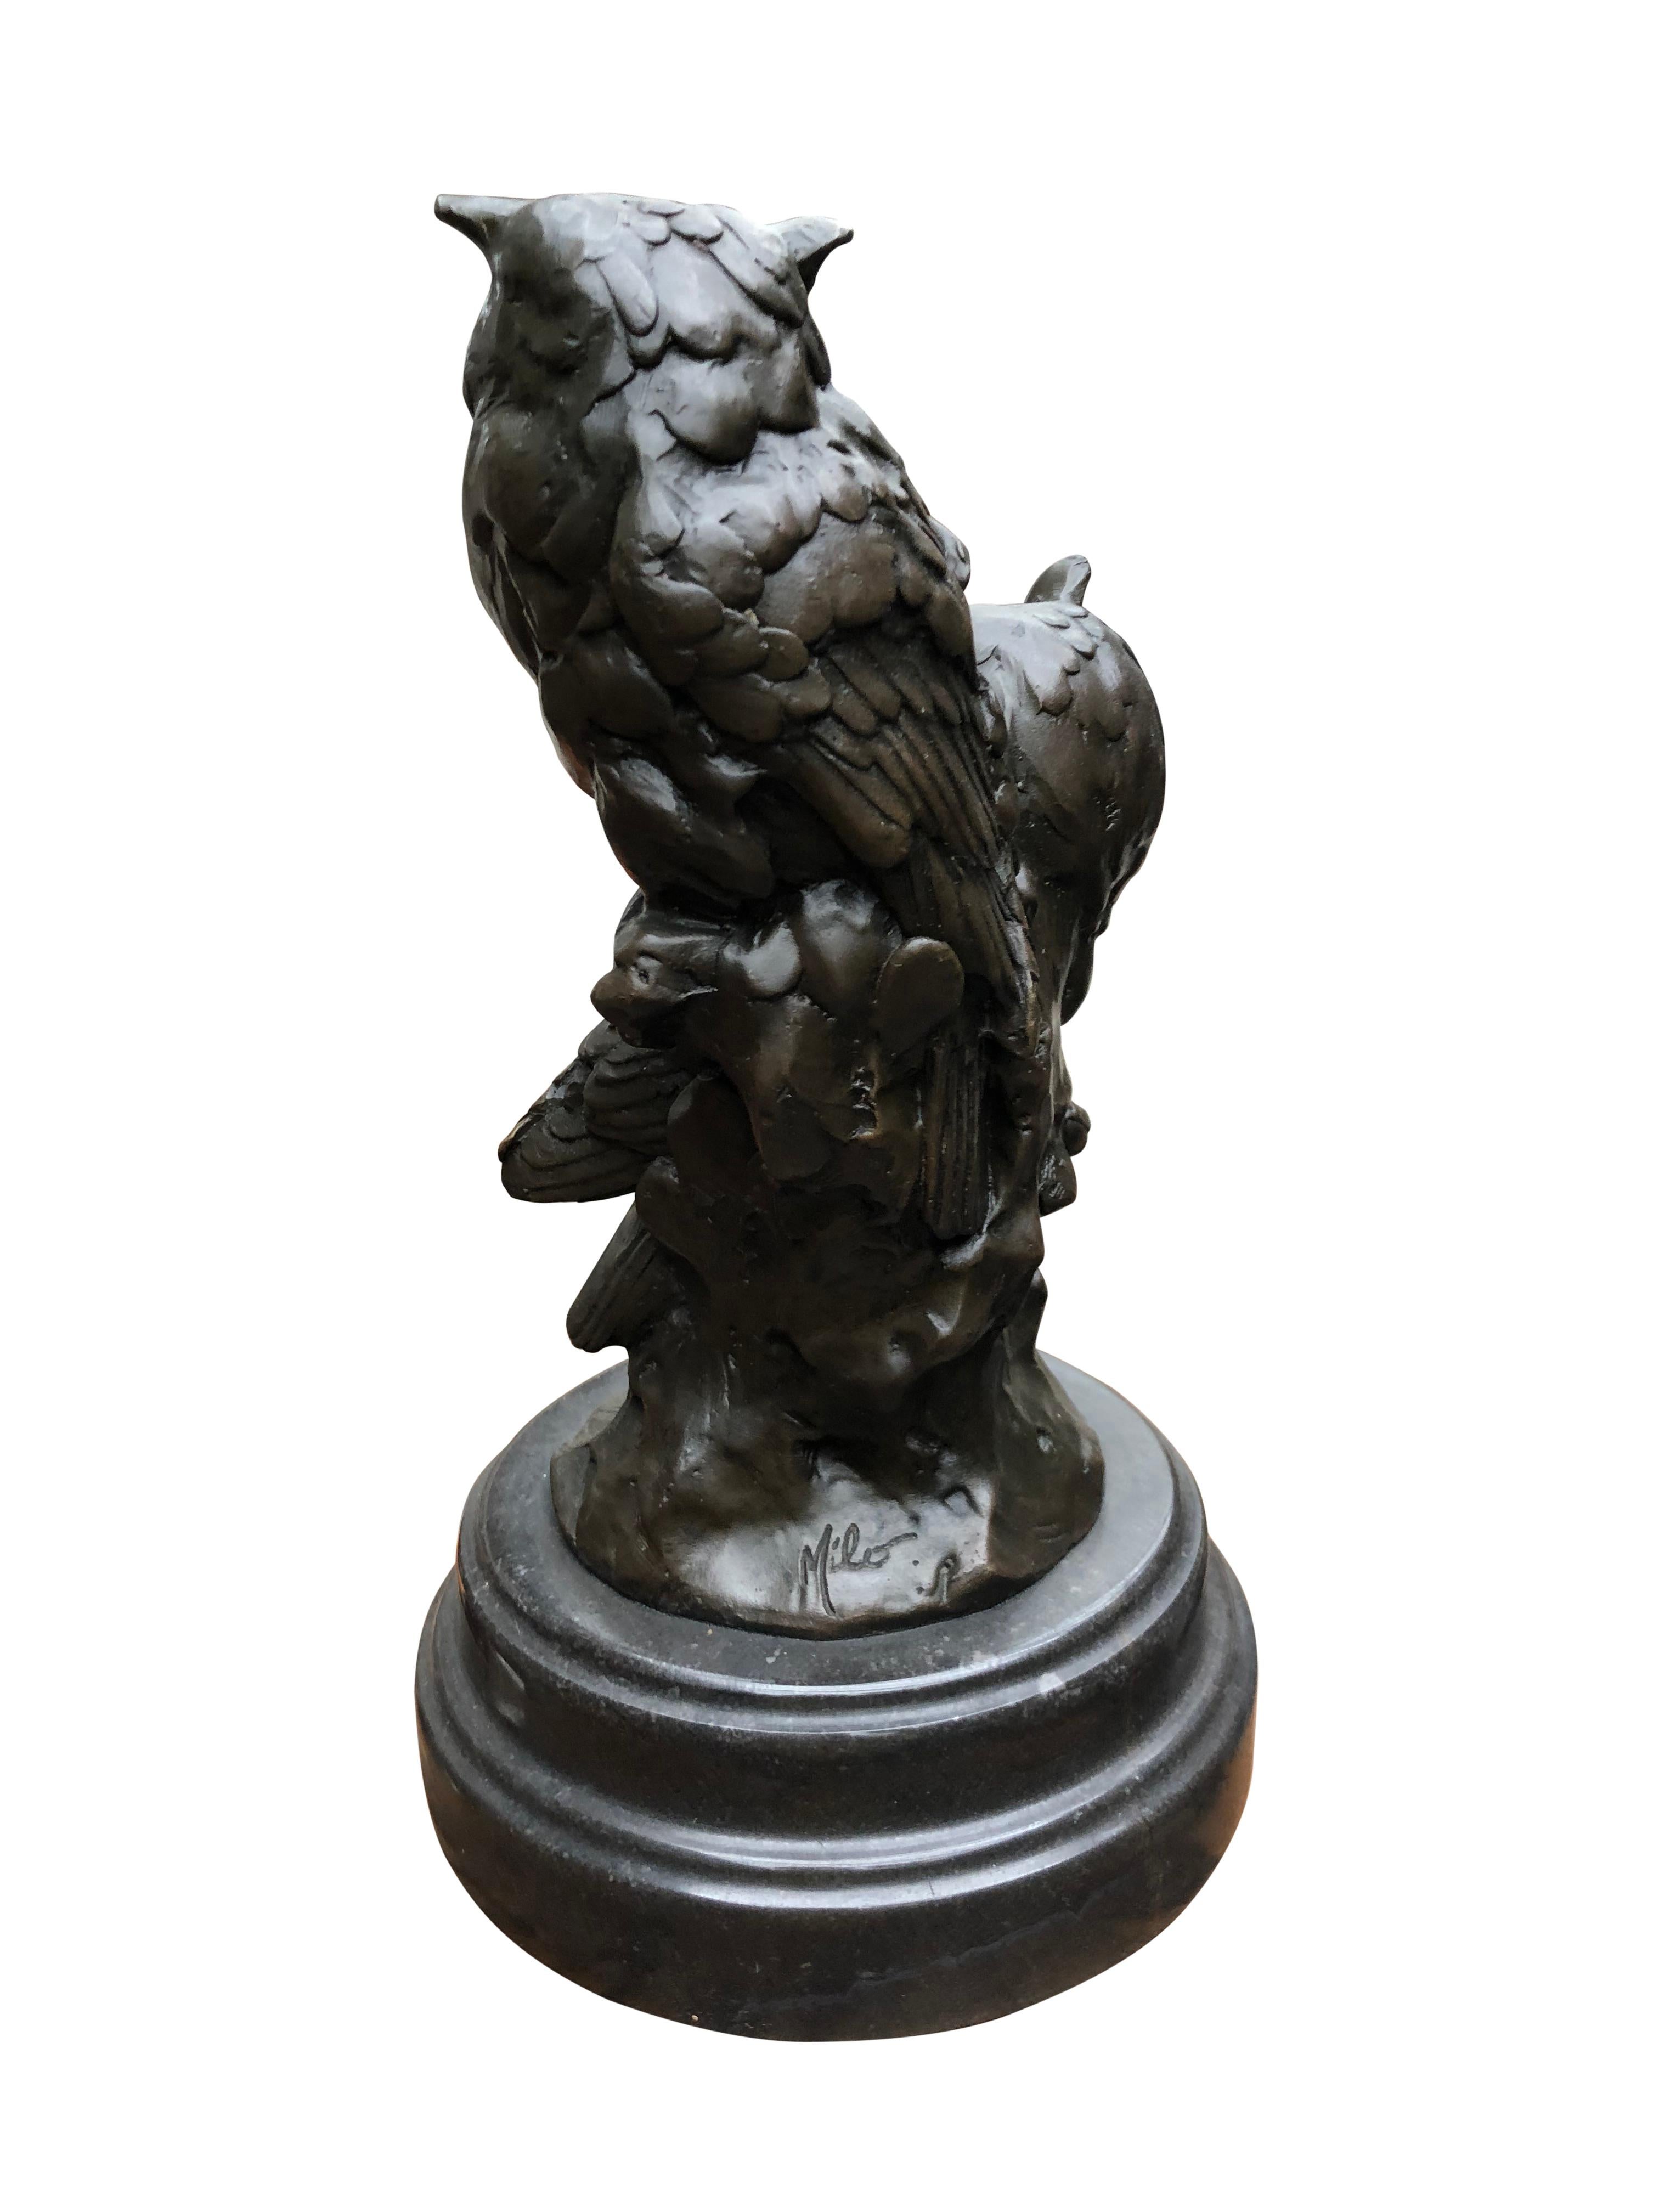 barn owl statue